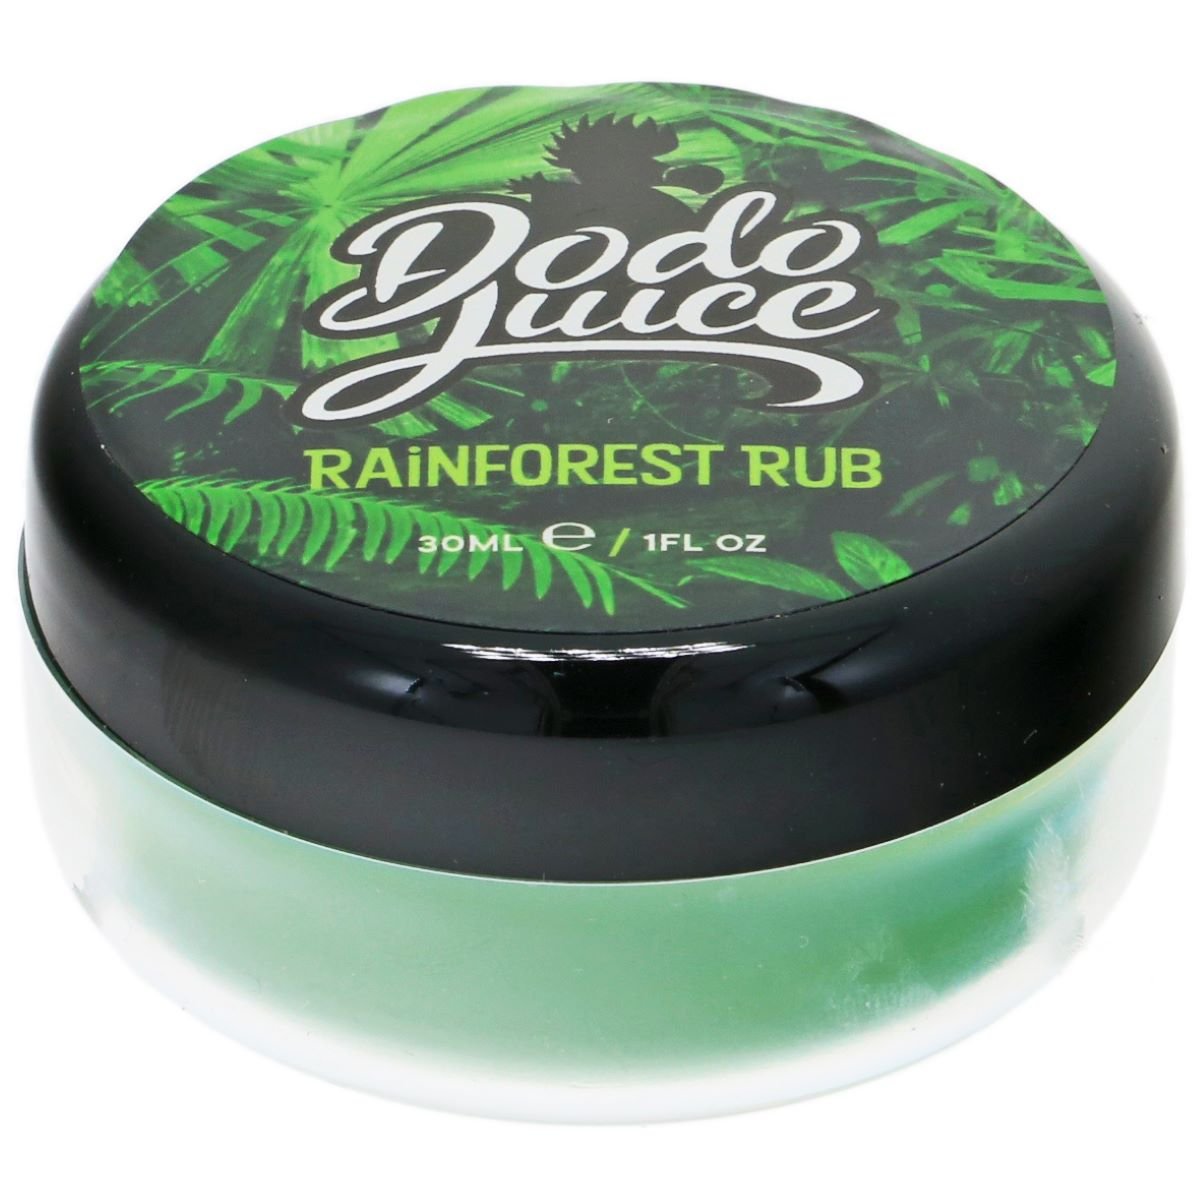 Rainforest Rub  soft wax for any coloured car - 30ml